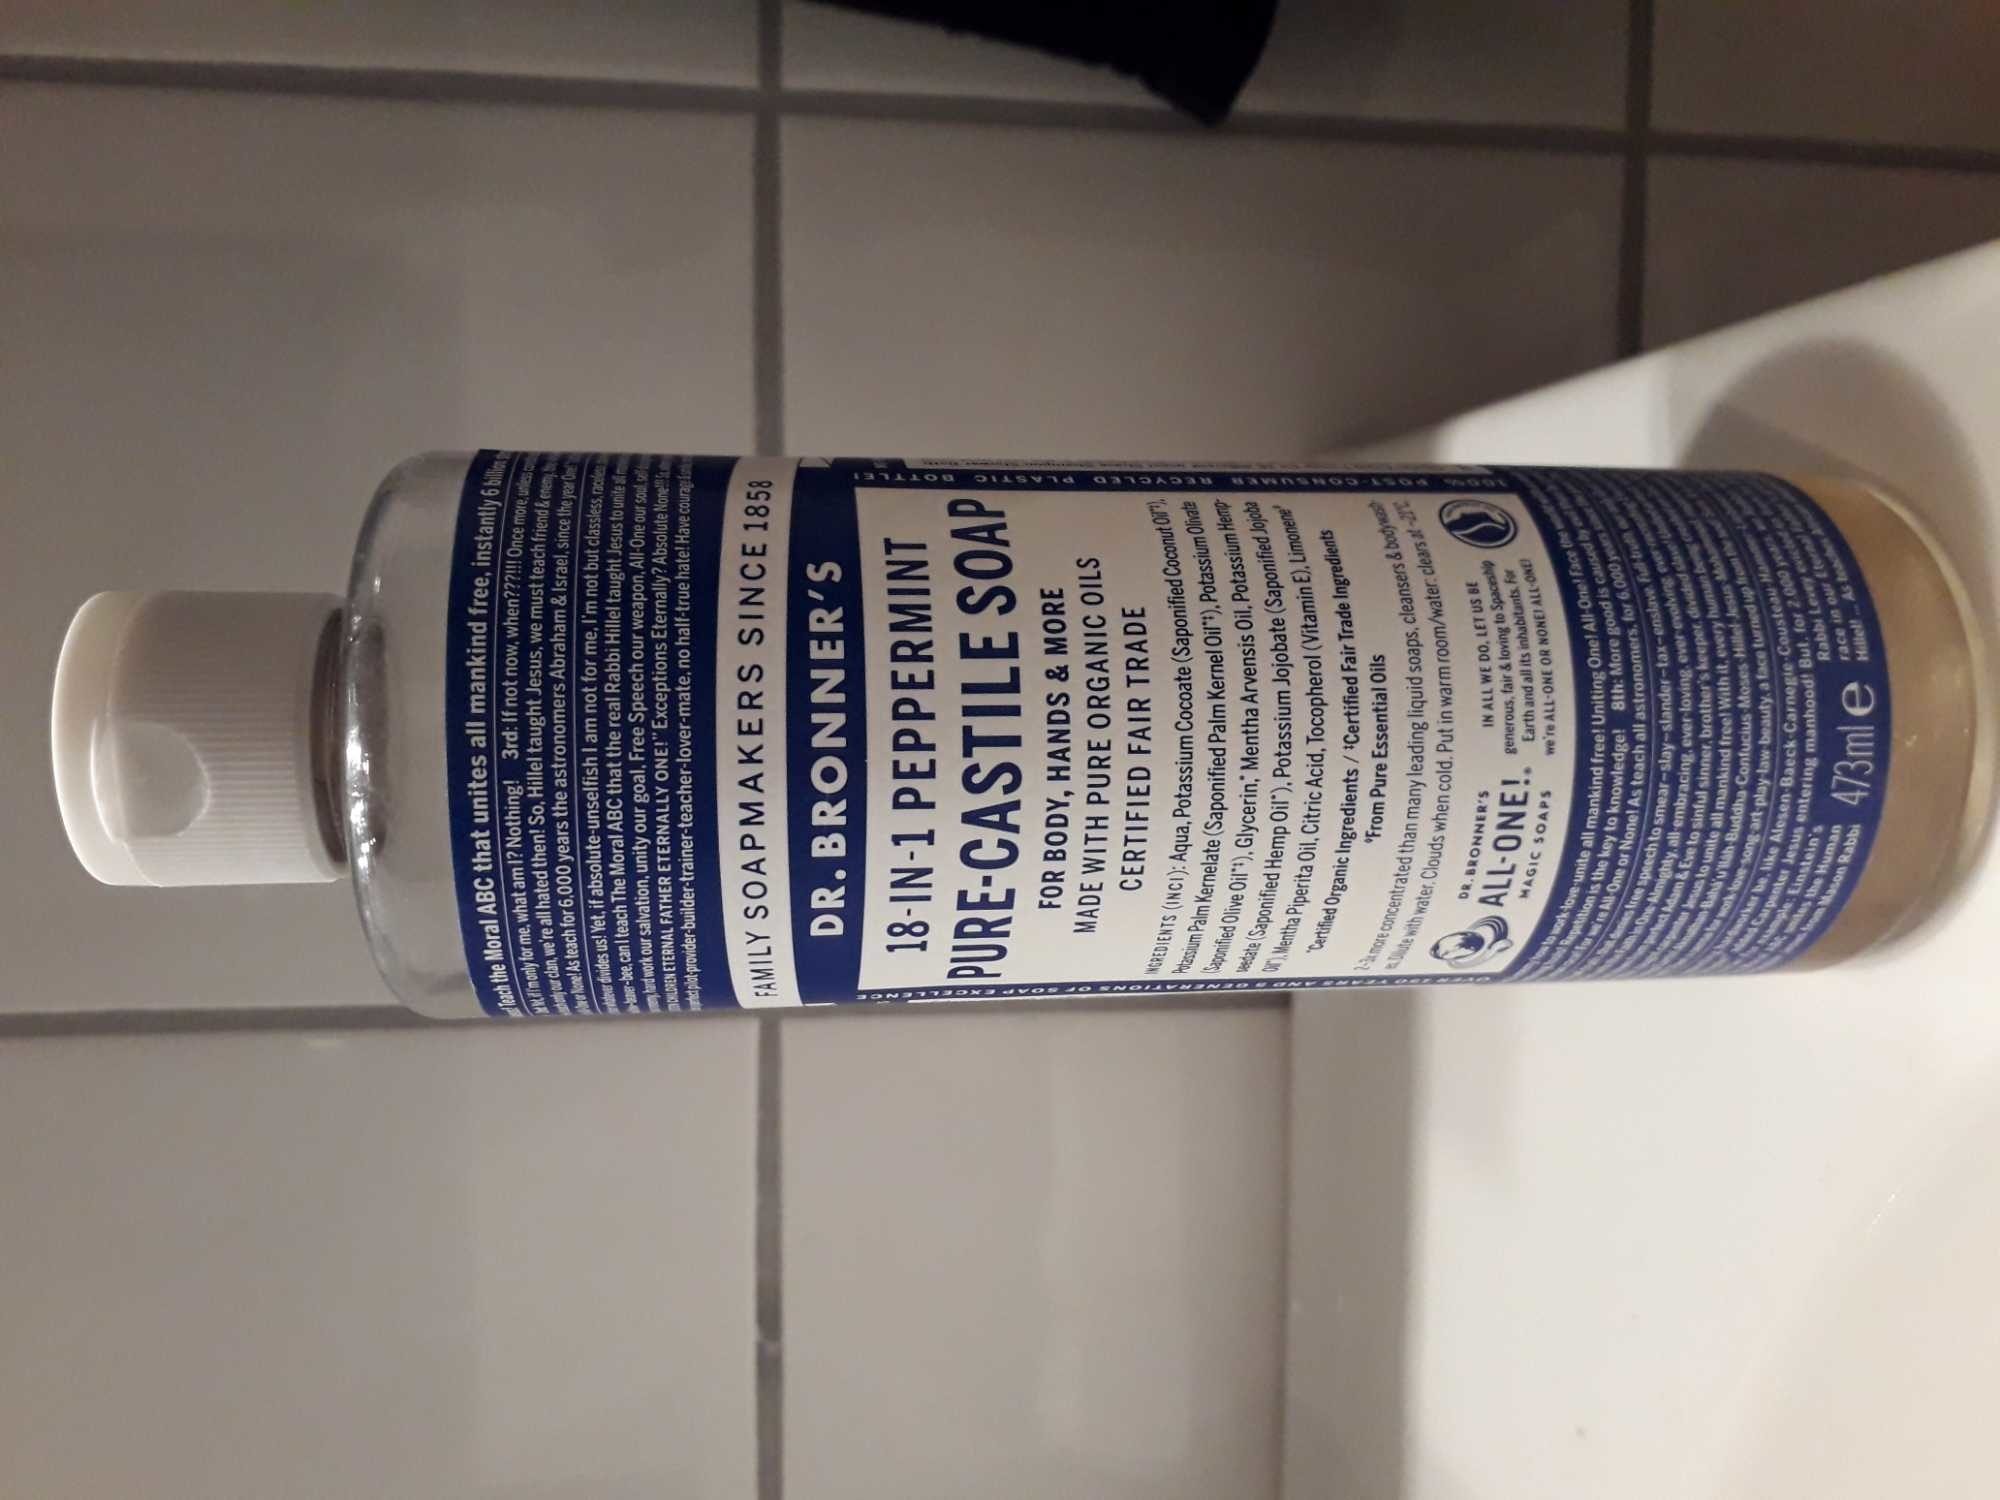 PURE-CASTILE SOAP 18-in-1 Peppermint - Product - en